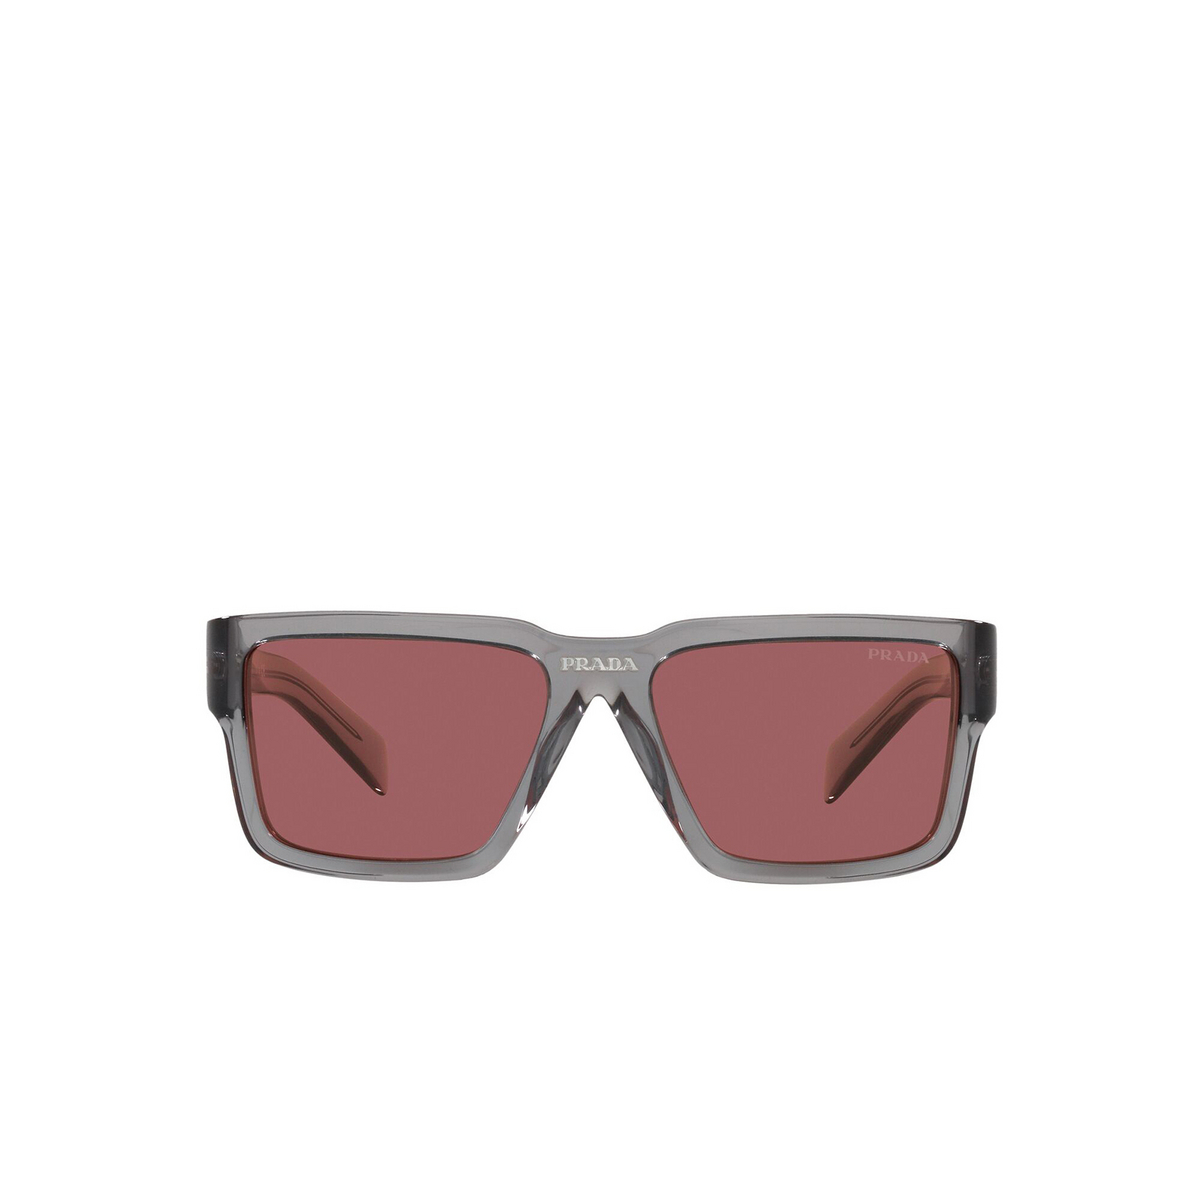 Prada® Rectangle Sunglasses: PR 10YS color Fume Crystal 08U0A0 - front view.